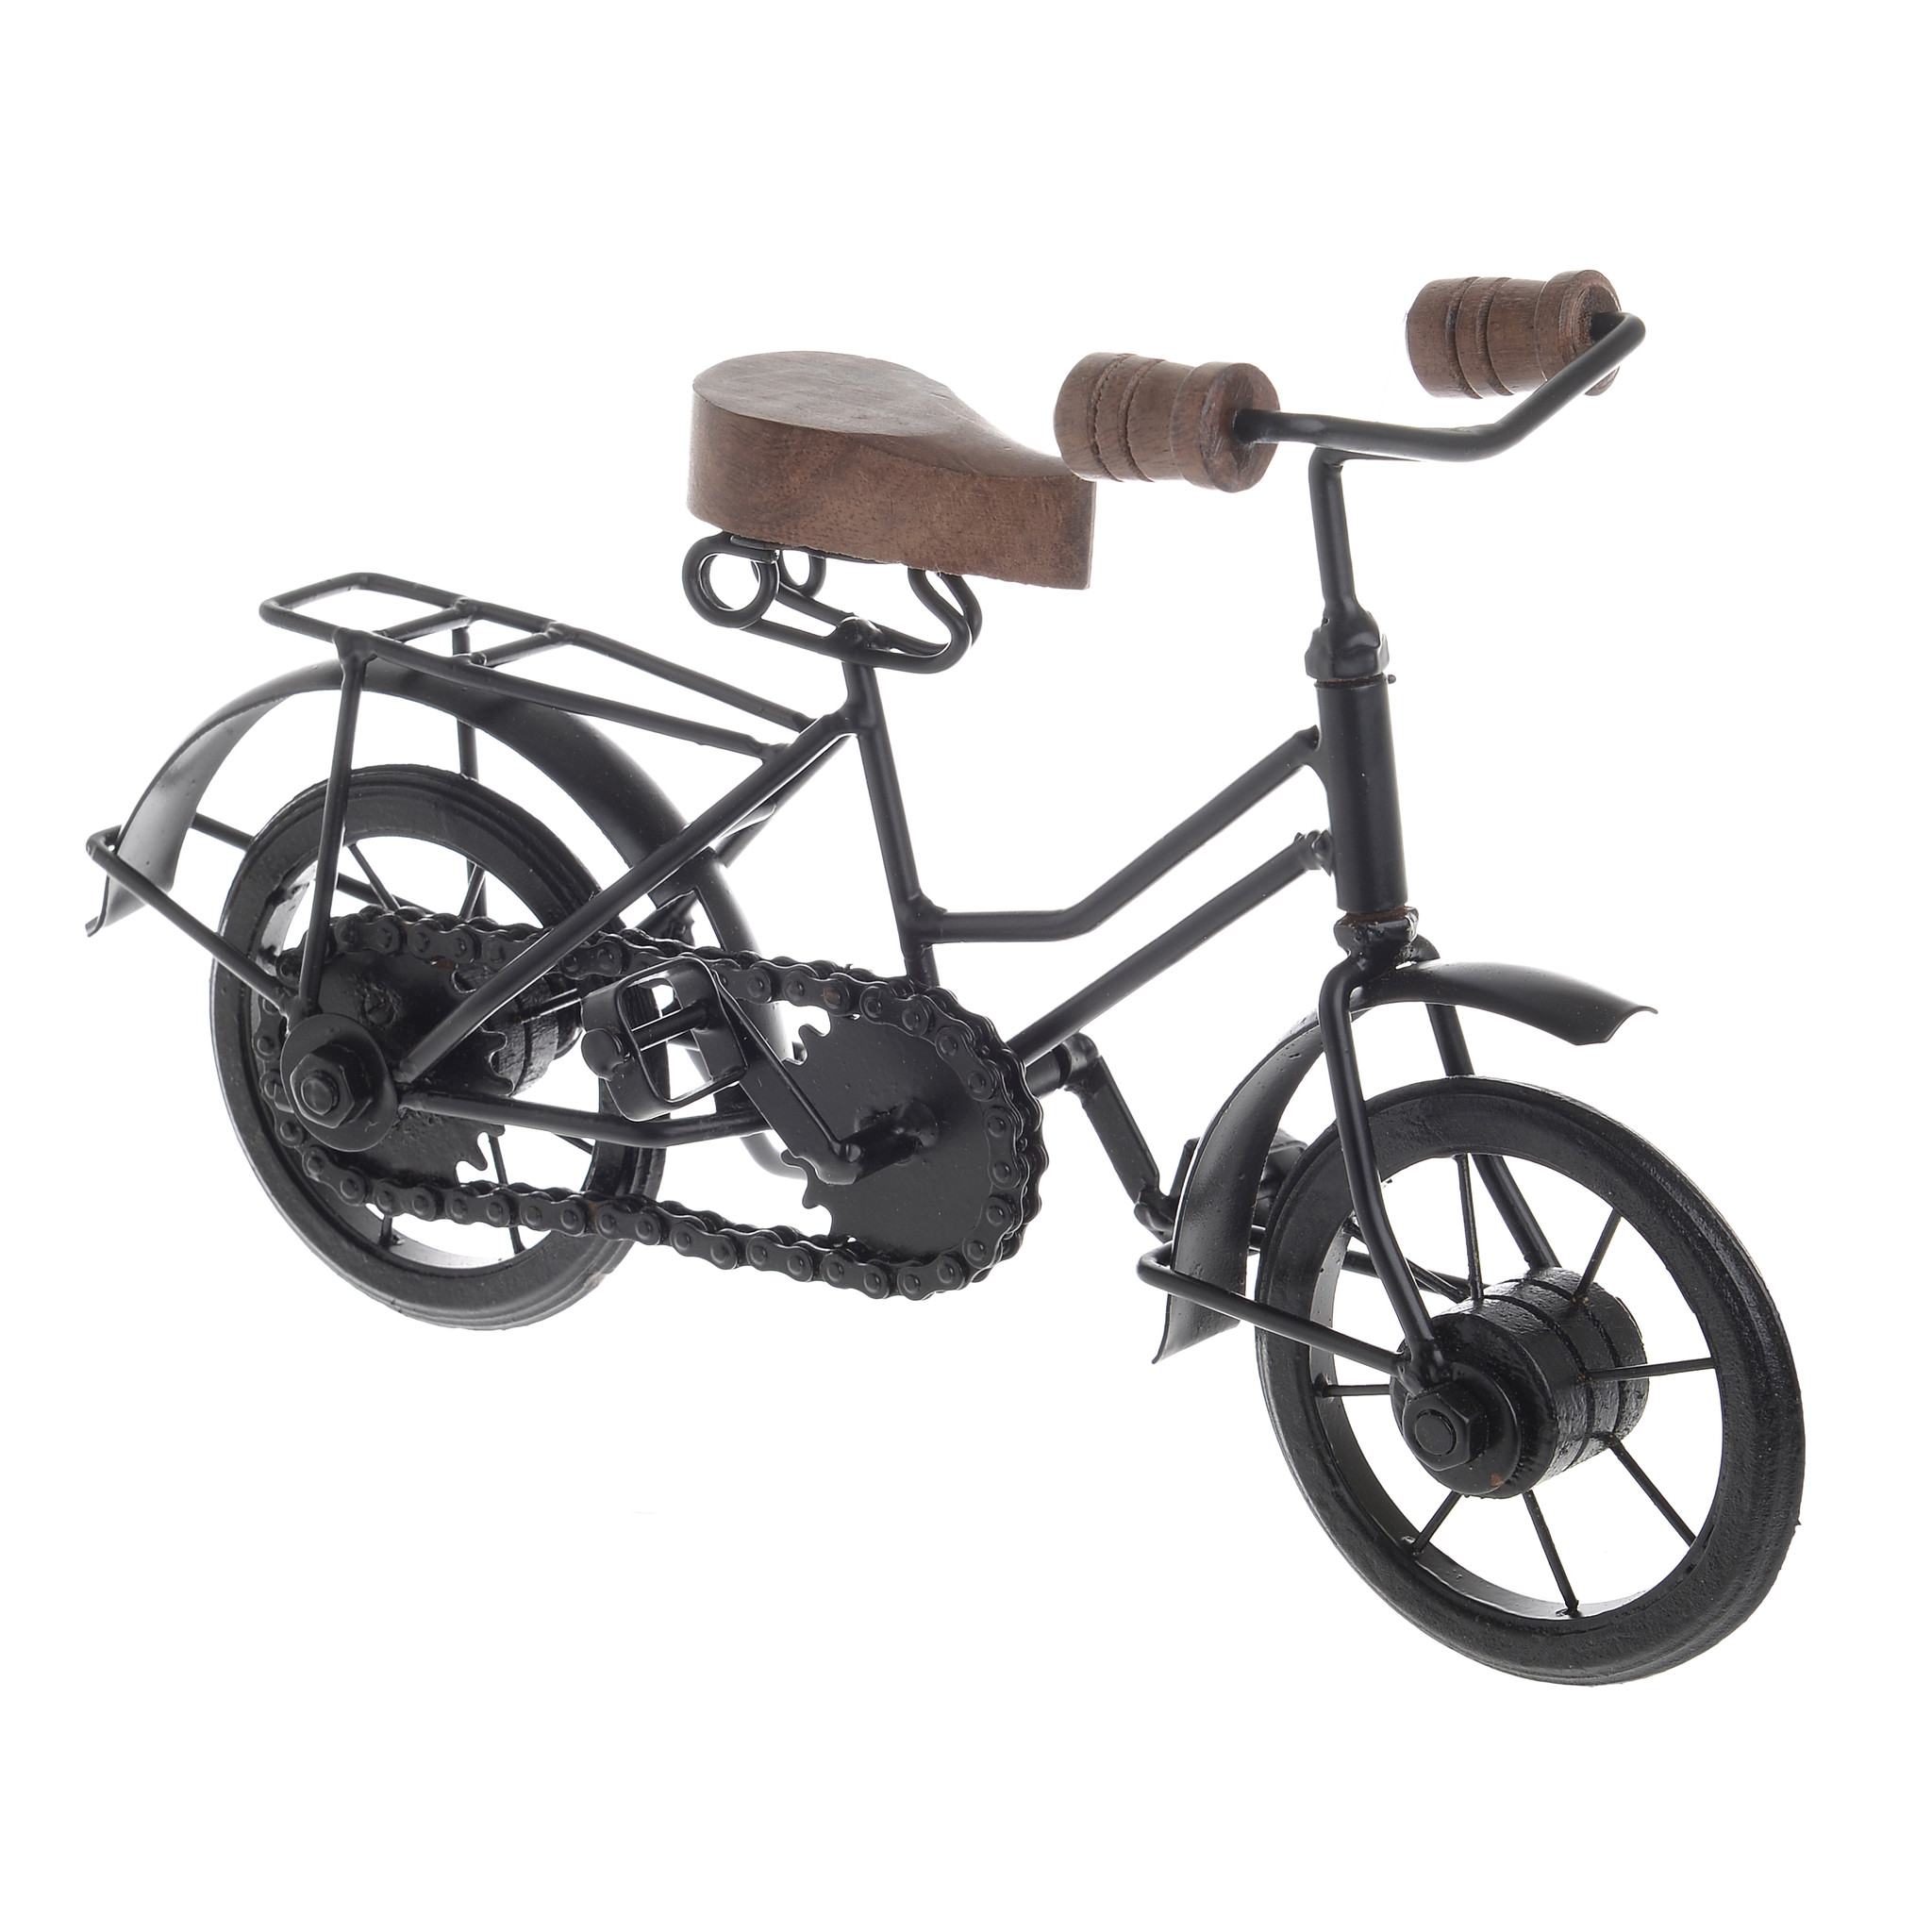 Bike model. Модели велосипедов. Моделька велосипед чёрный. Зд моделька велосипед. Велосипед Polato.